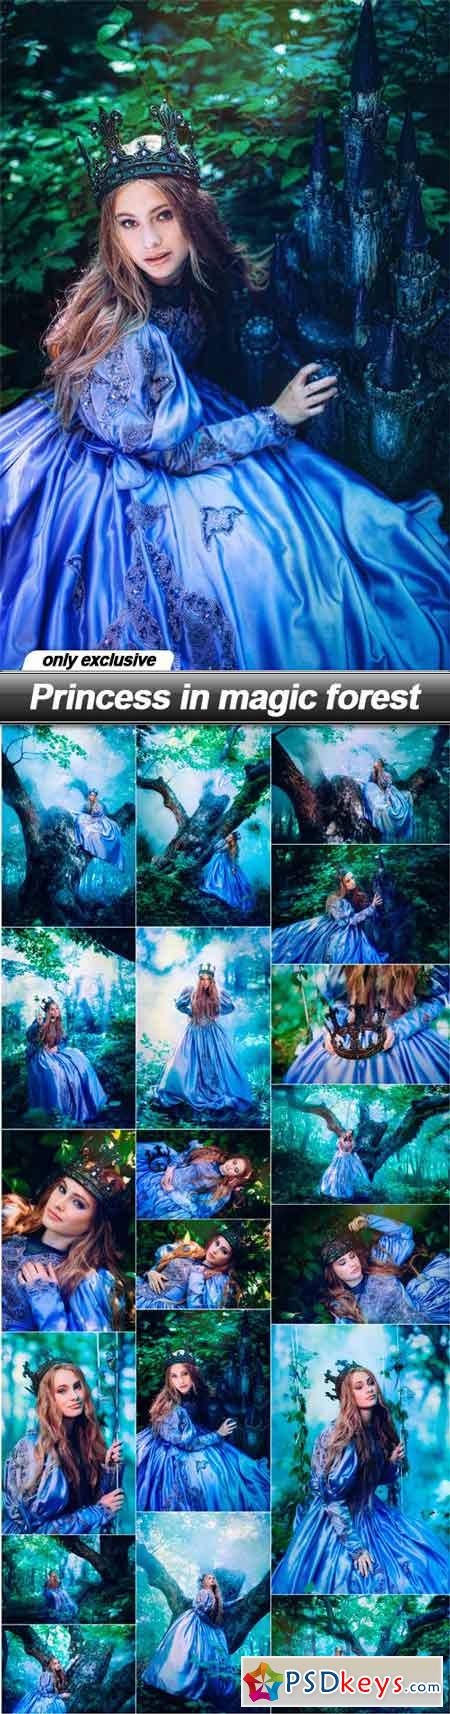 Princess in magic forest - 19 UHQ JPEG